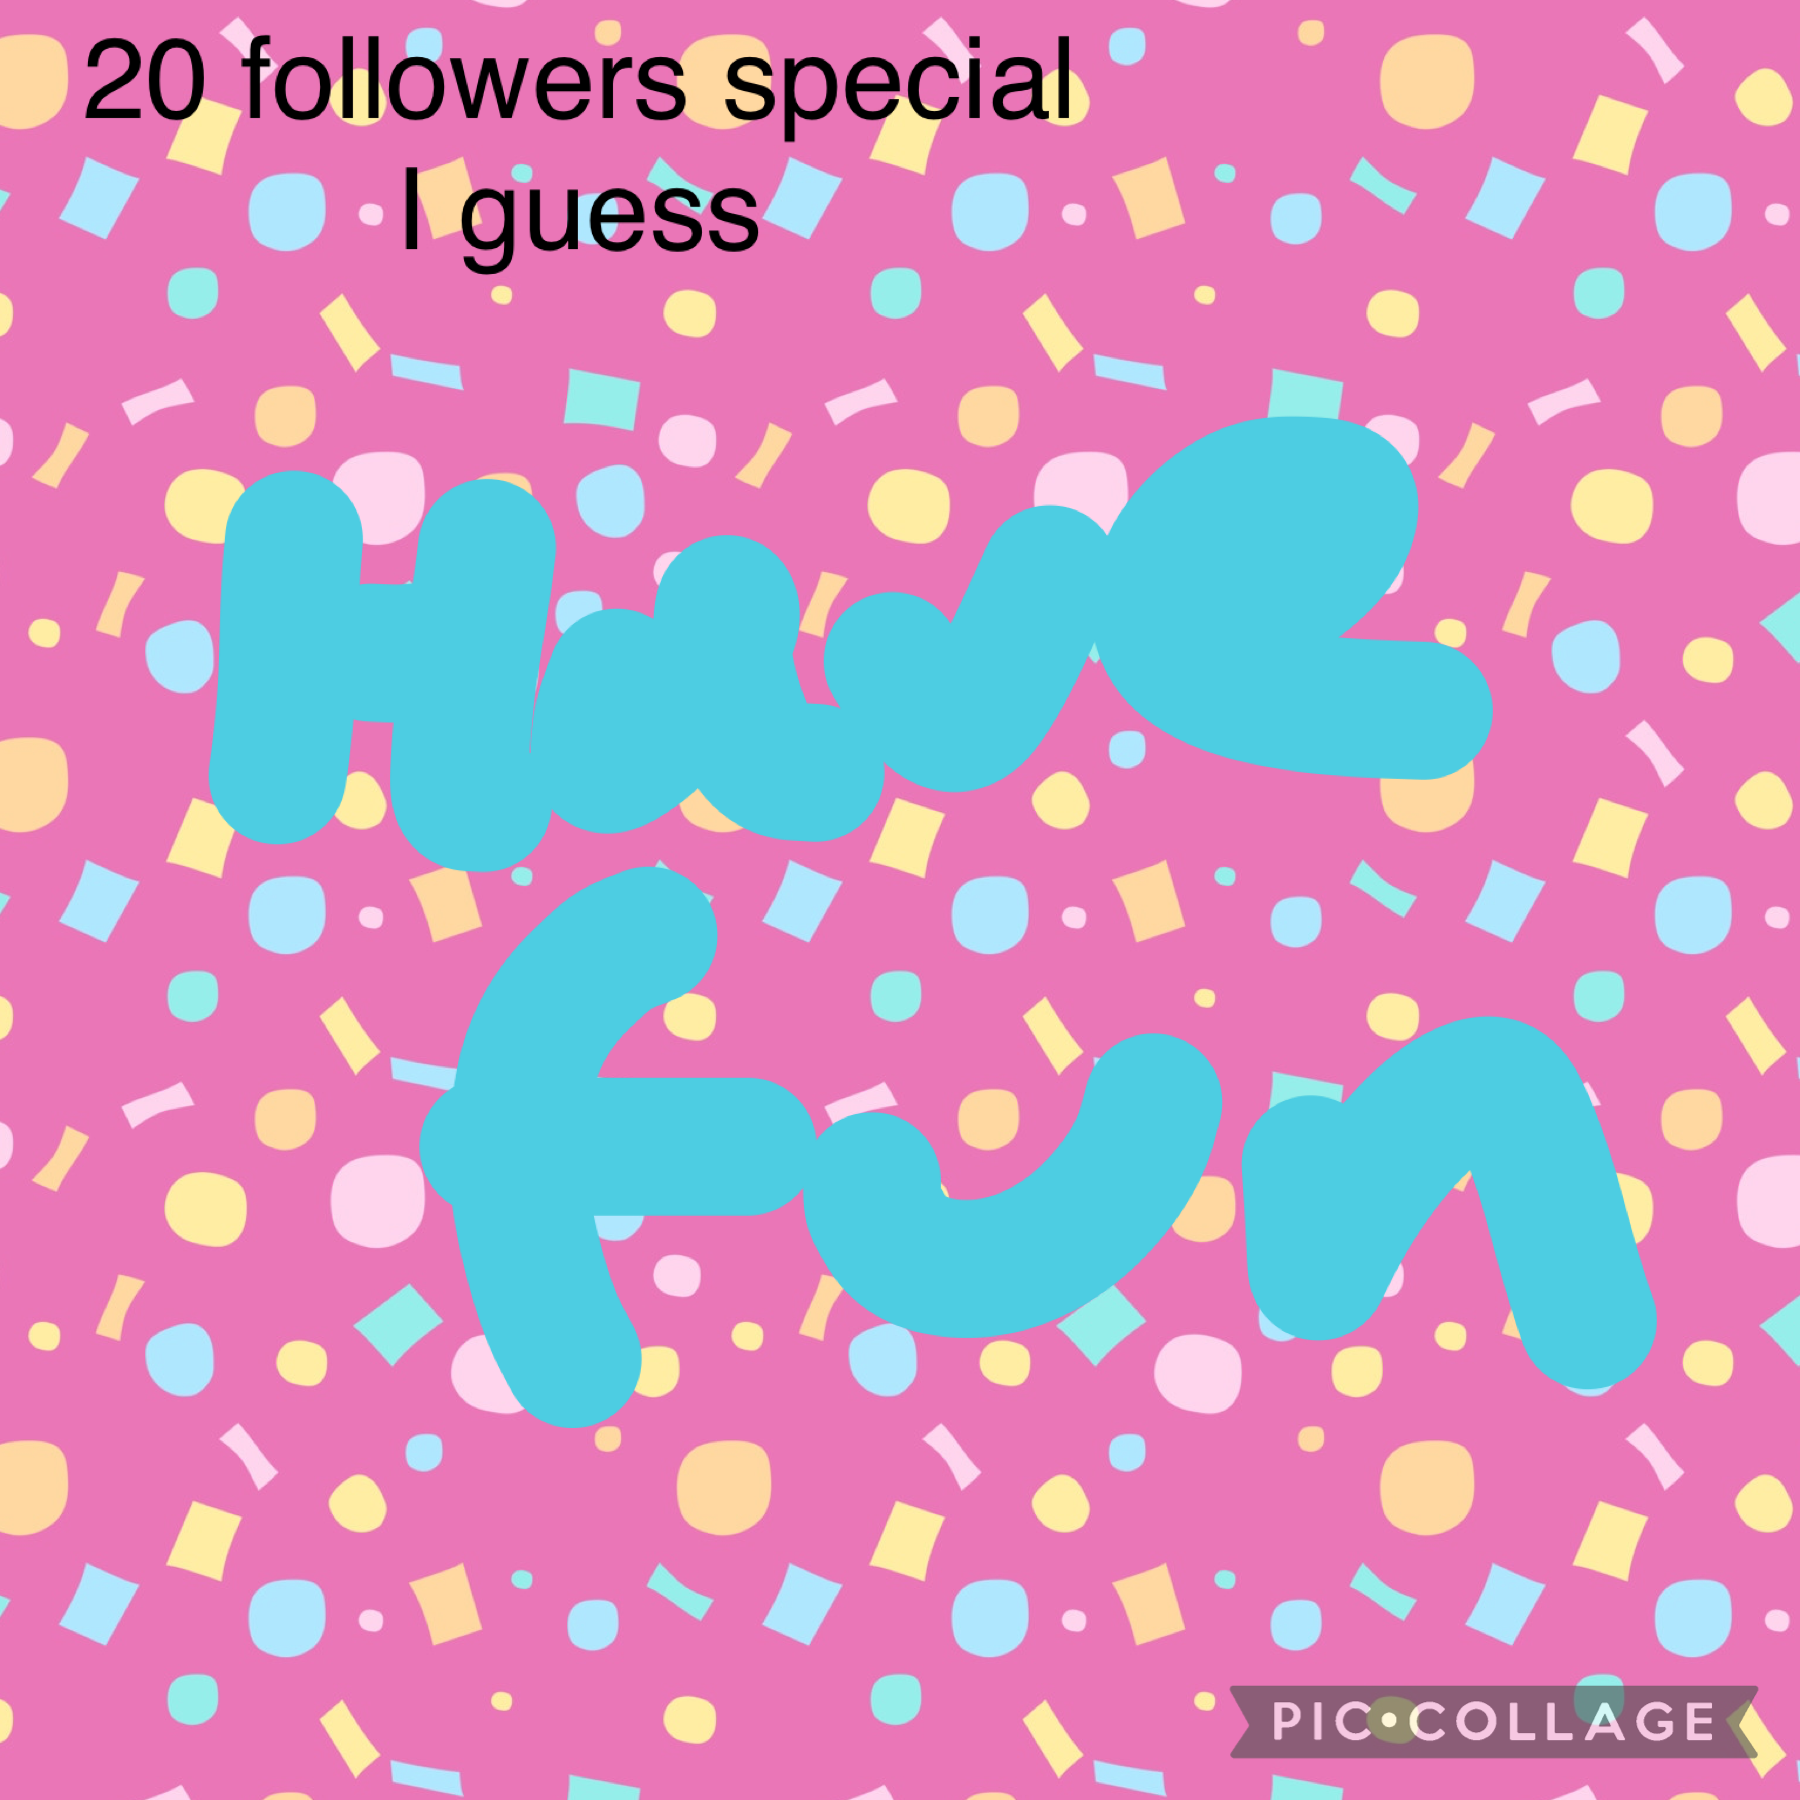 20 follower special!